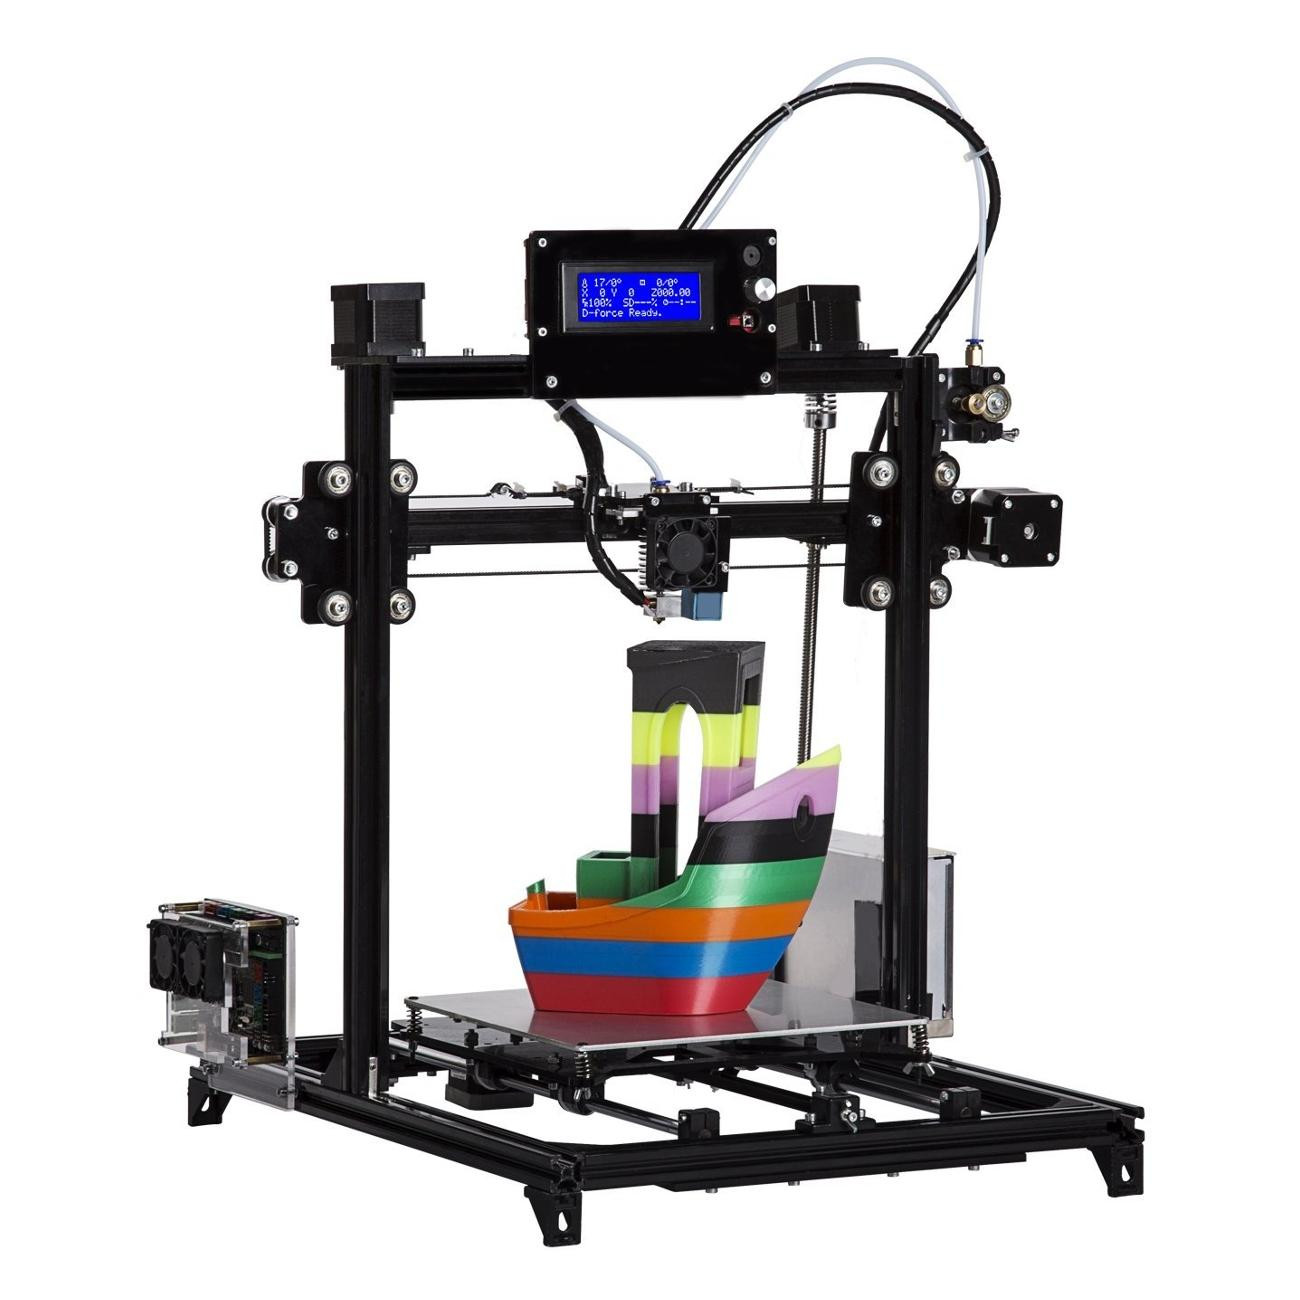 3D Printer DIY Kit
 flsun prusa i3 diy desktop 3d printer kit 200x200x220mm